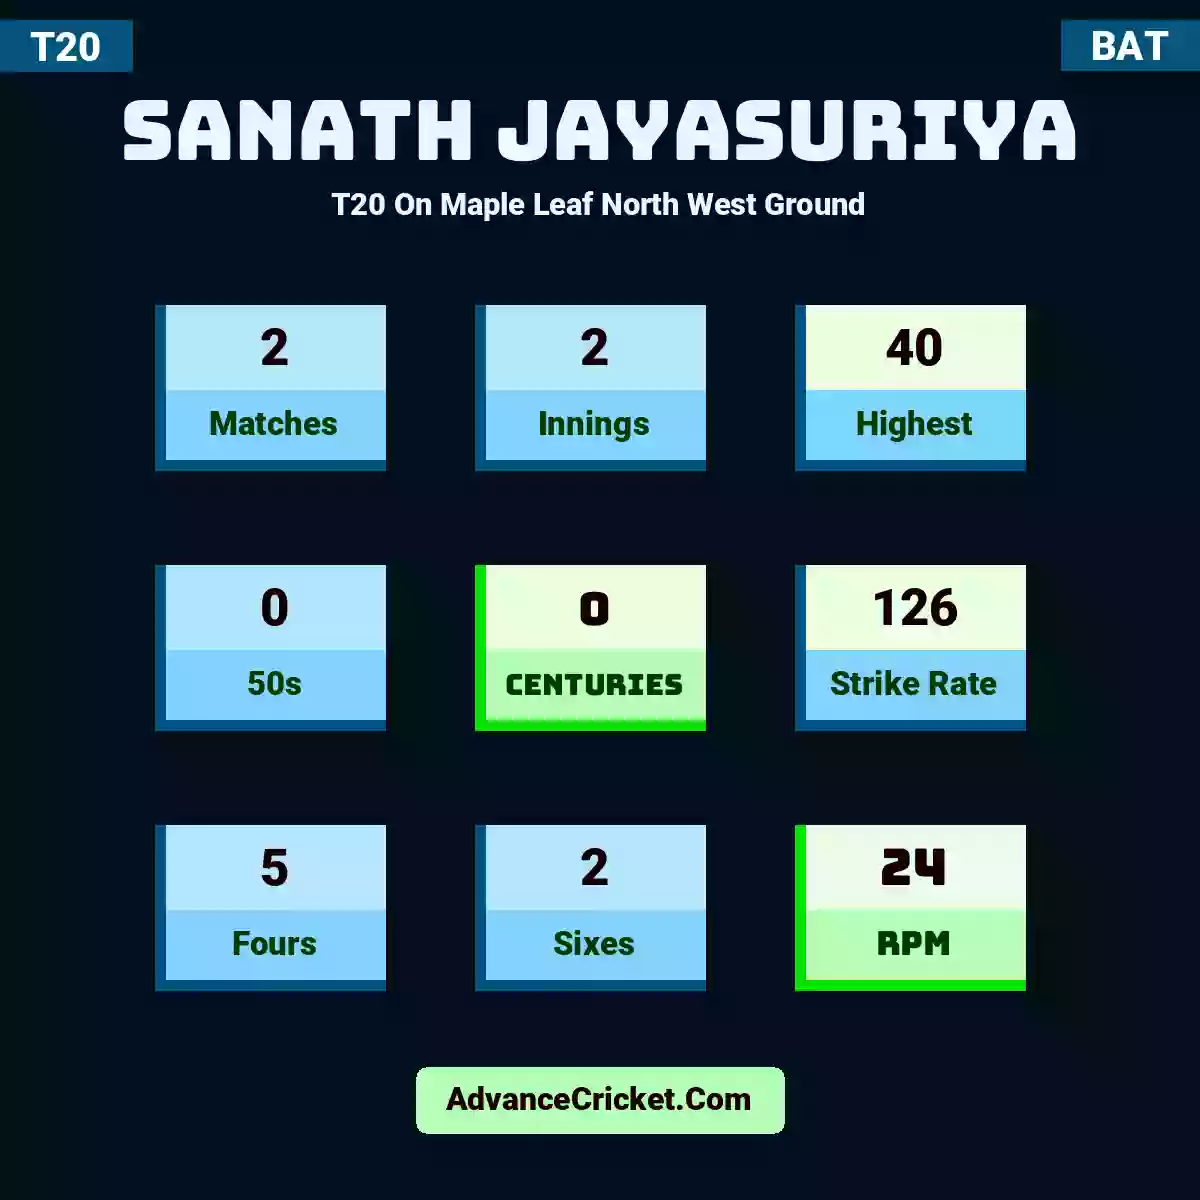 Sanath Jayasuriya T20  On Maple Leaf North West Ground, Sanath Jayasuriya played 2 matches, scored 40 runs as highest, 0 half-centuries, and 0 centuries, with a strike rate of 126. S.Jayasuriya hit 5 fours and 2 sixes, with an RPM of 24.